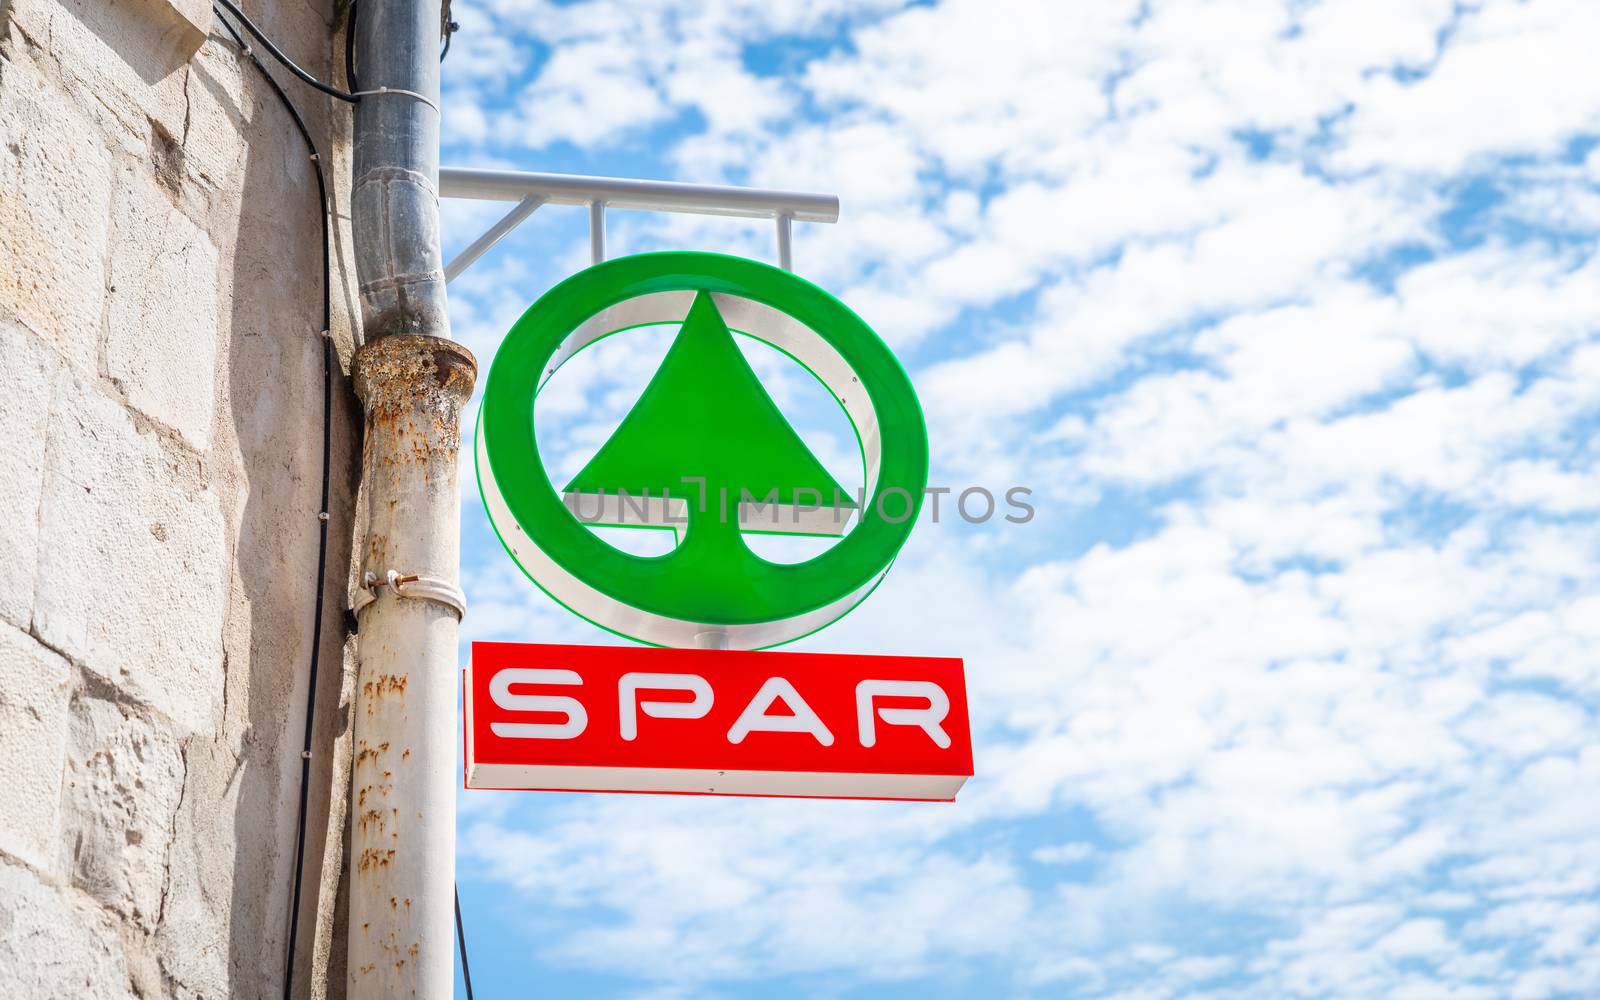 Spar sign in Bayonne, France by dutourdumonde